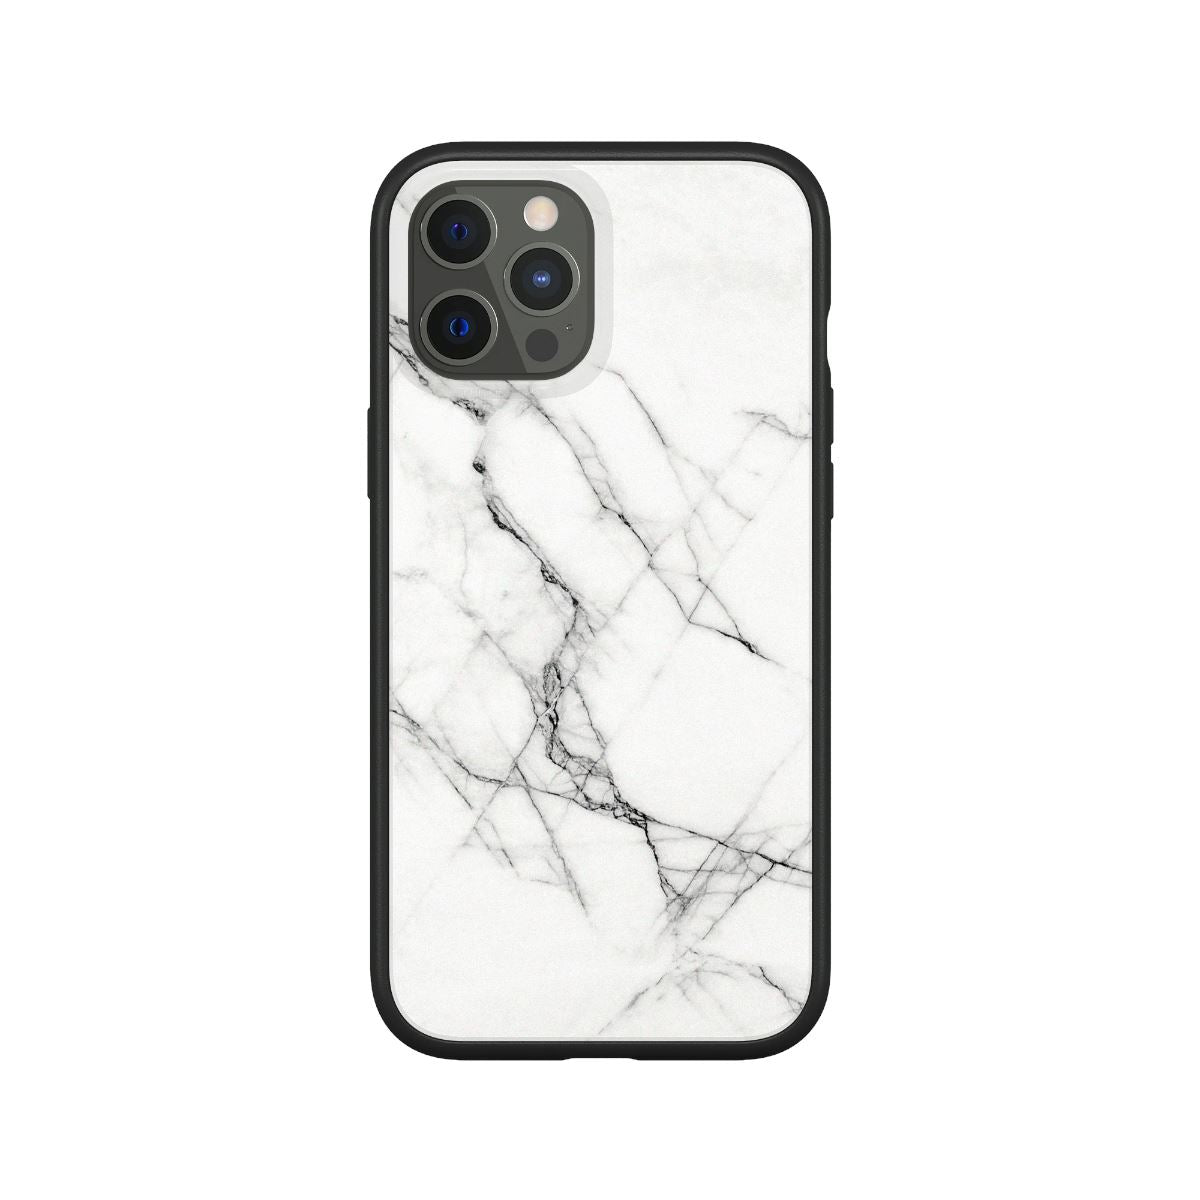 RhinoShield Mod NX Modular Case for iPhone 12 Series (2020) iPhone 12 Series RhinoShield iPhone 12/12 Pro 6.1" Roma Marble (Backplate) 